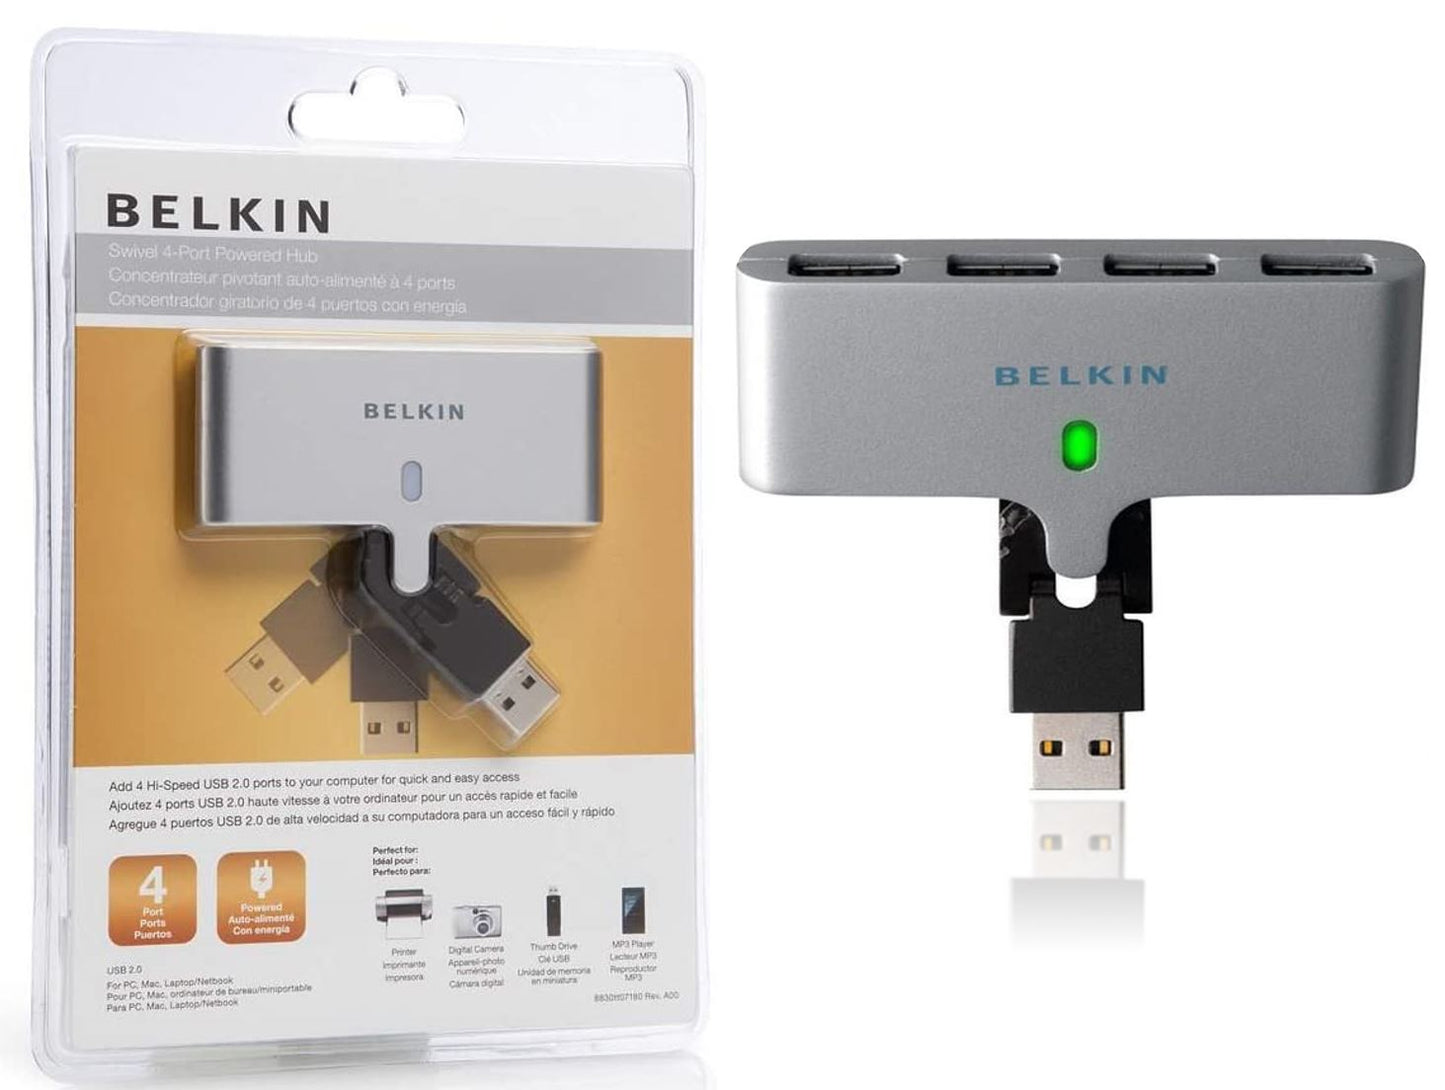 Belkin 4 port USB Swivel Multi USB 2.0 Hub Splitter for PC / Mac